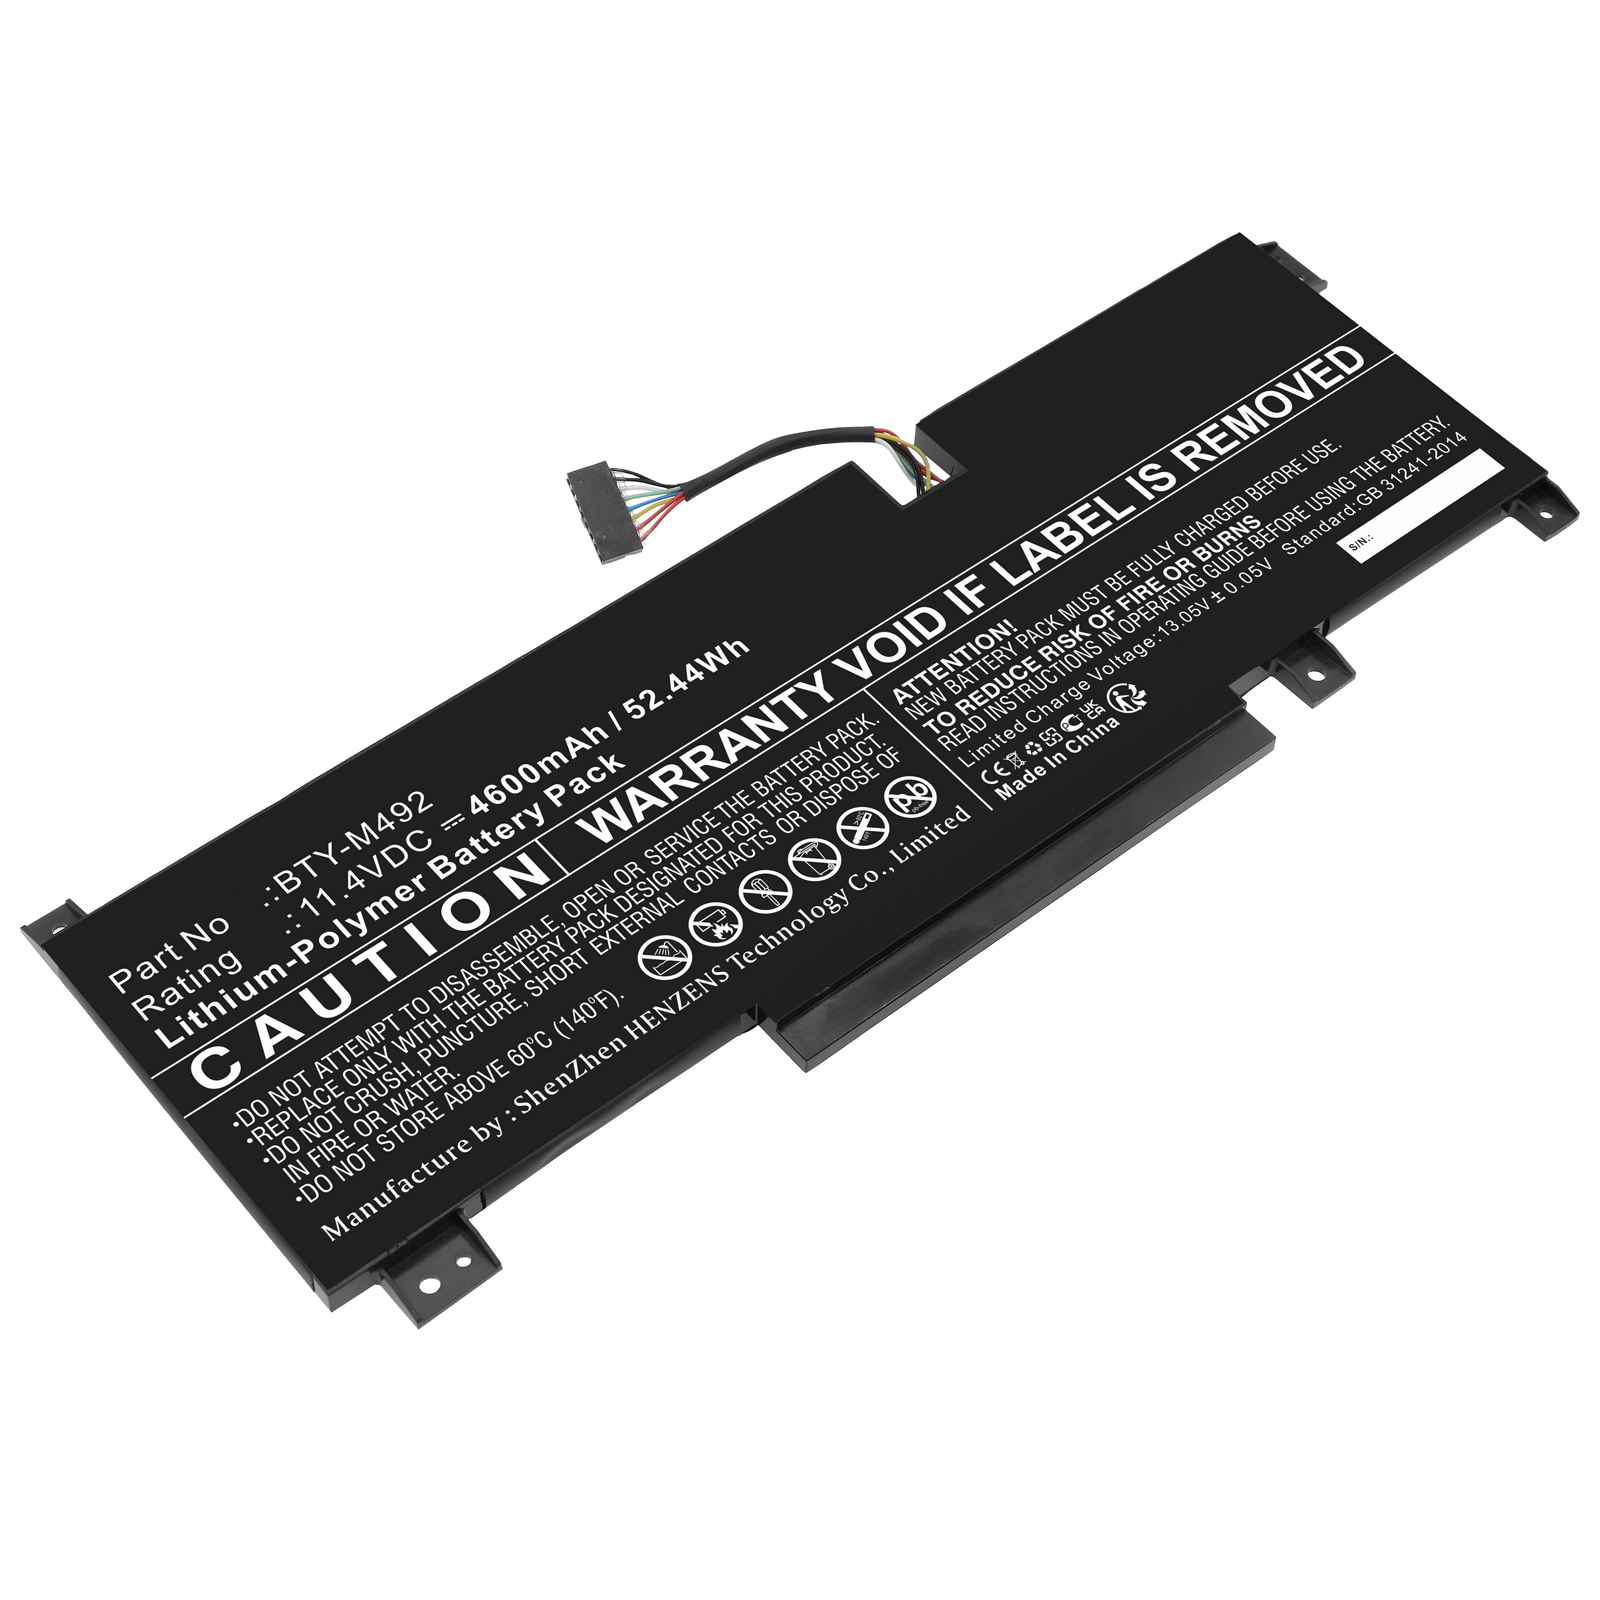 Synergy Digital Laptop Battery, Compatible with MSI BTY-M492 Laptop Battery (Li-Pol, 11.4V, 4600mAh)